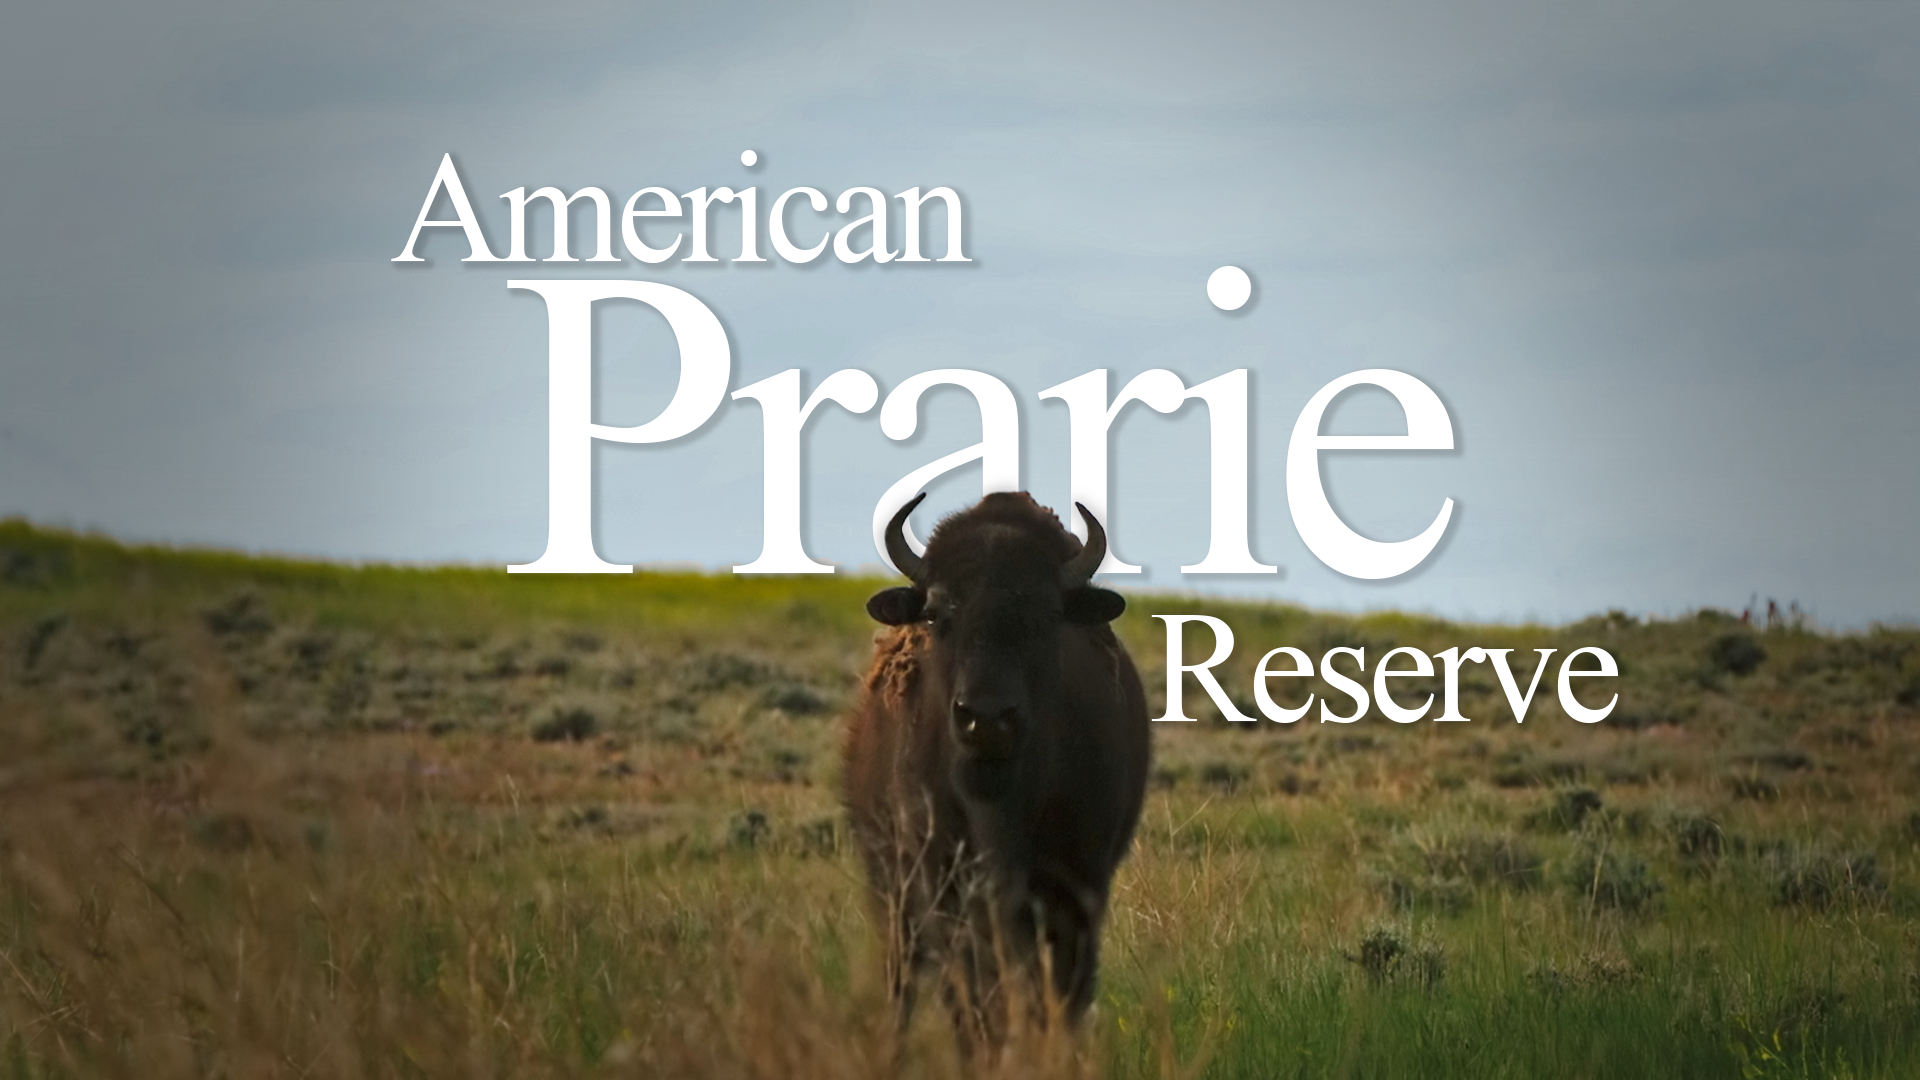 American Prarie Reserve Trailer|https://vimeo.com/391784233/3306e89468